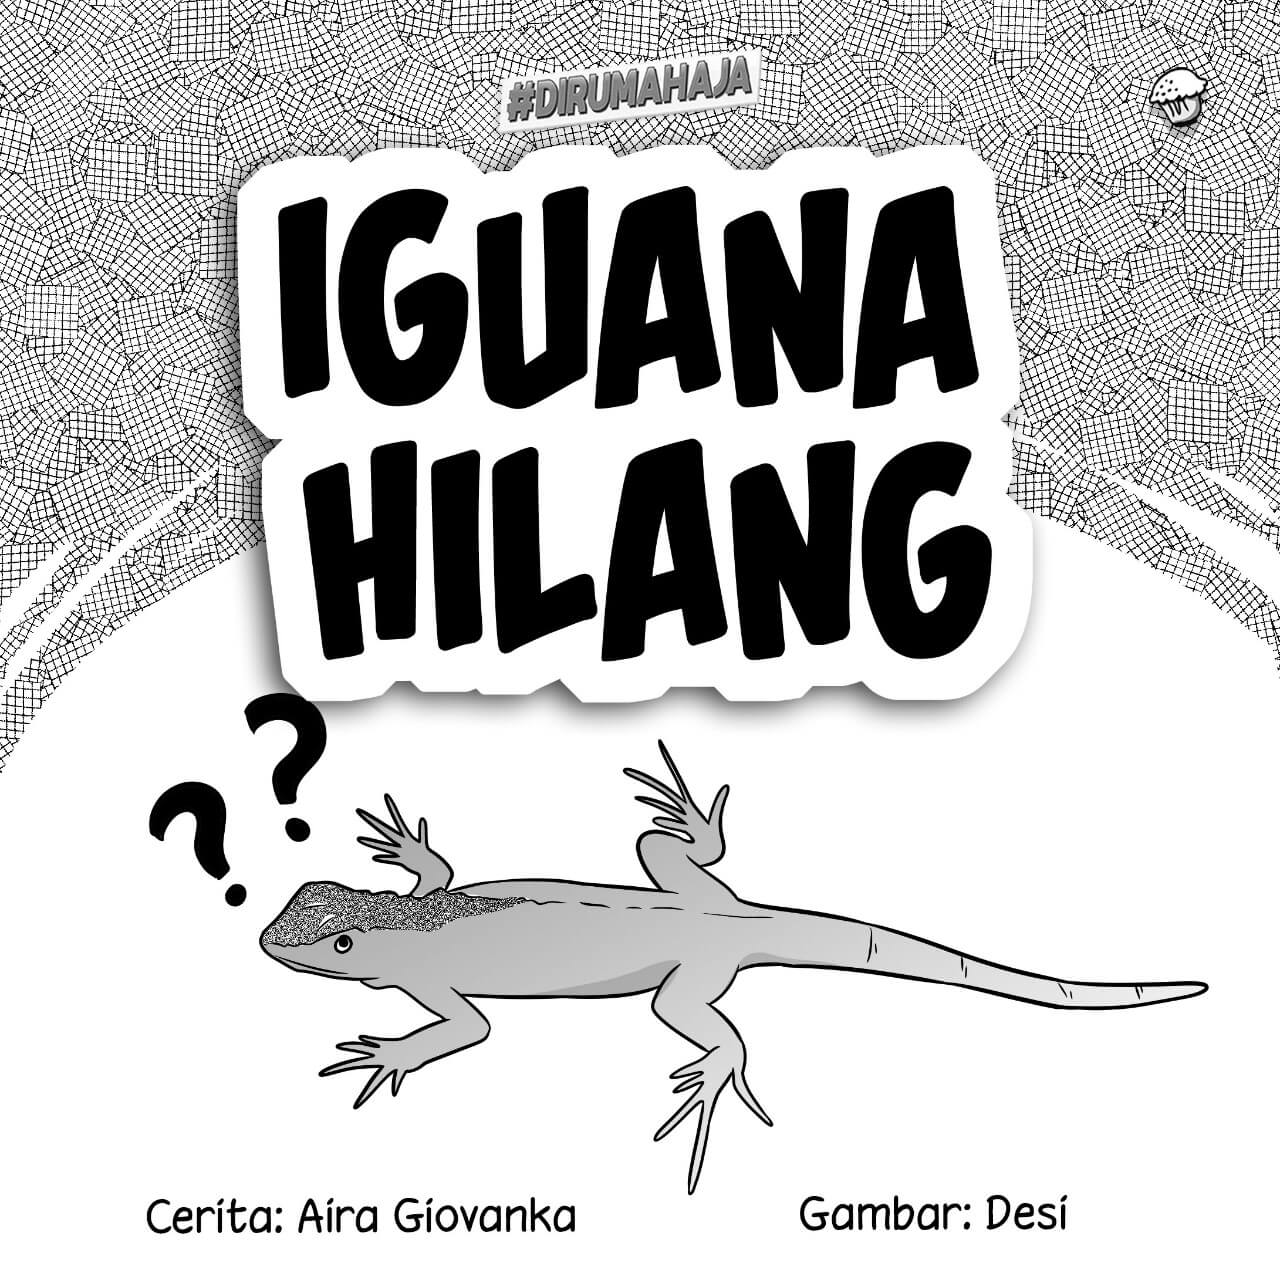 iguana hilang cover bw